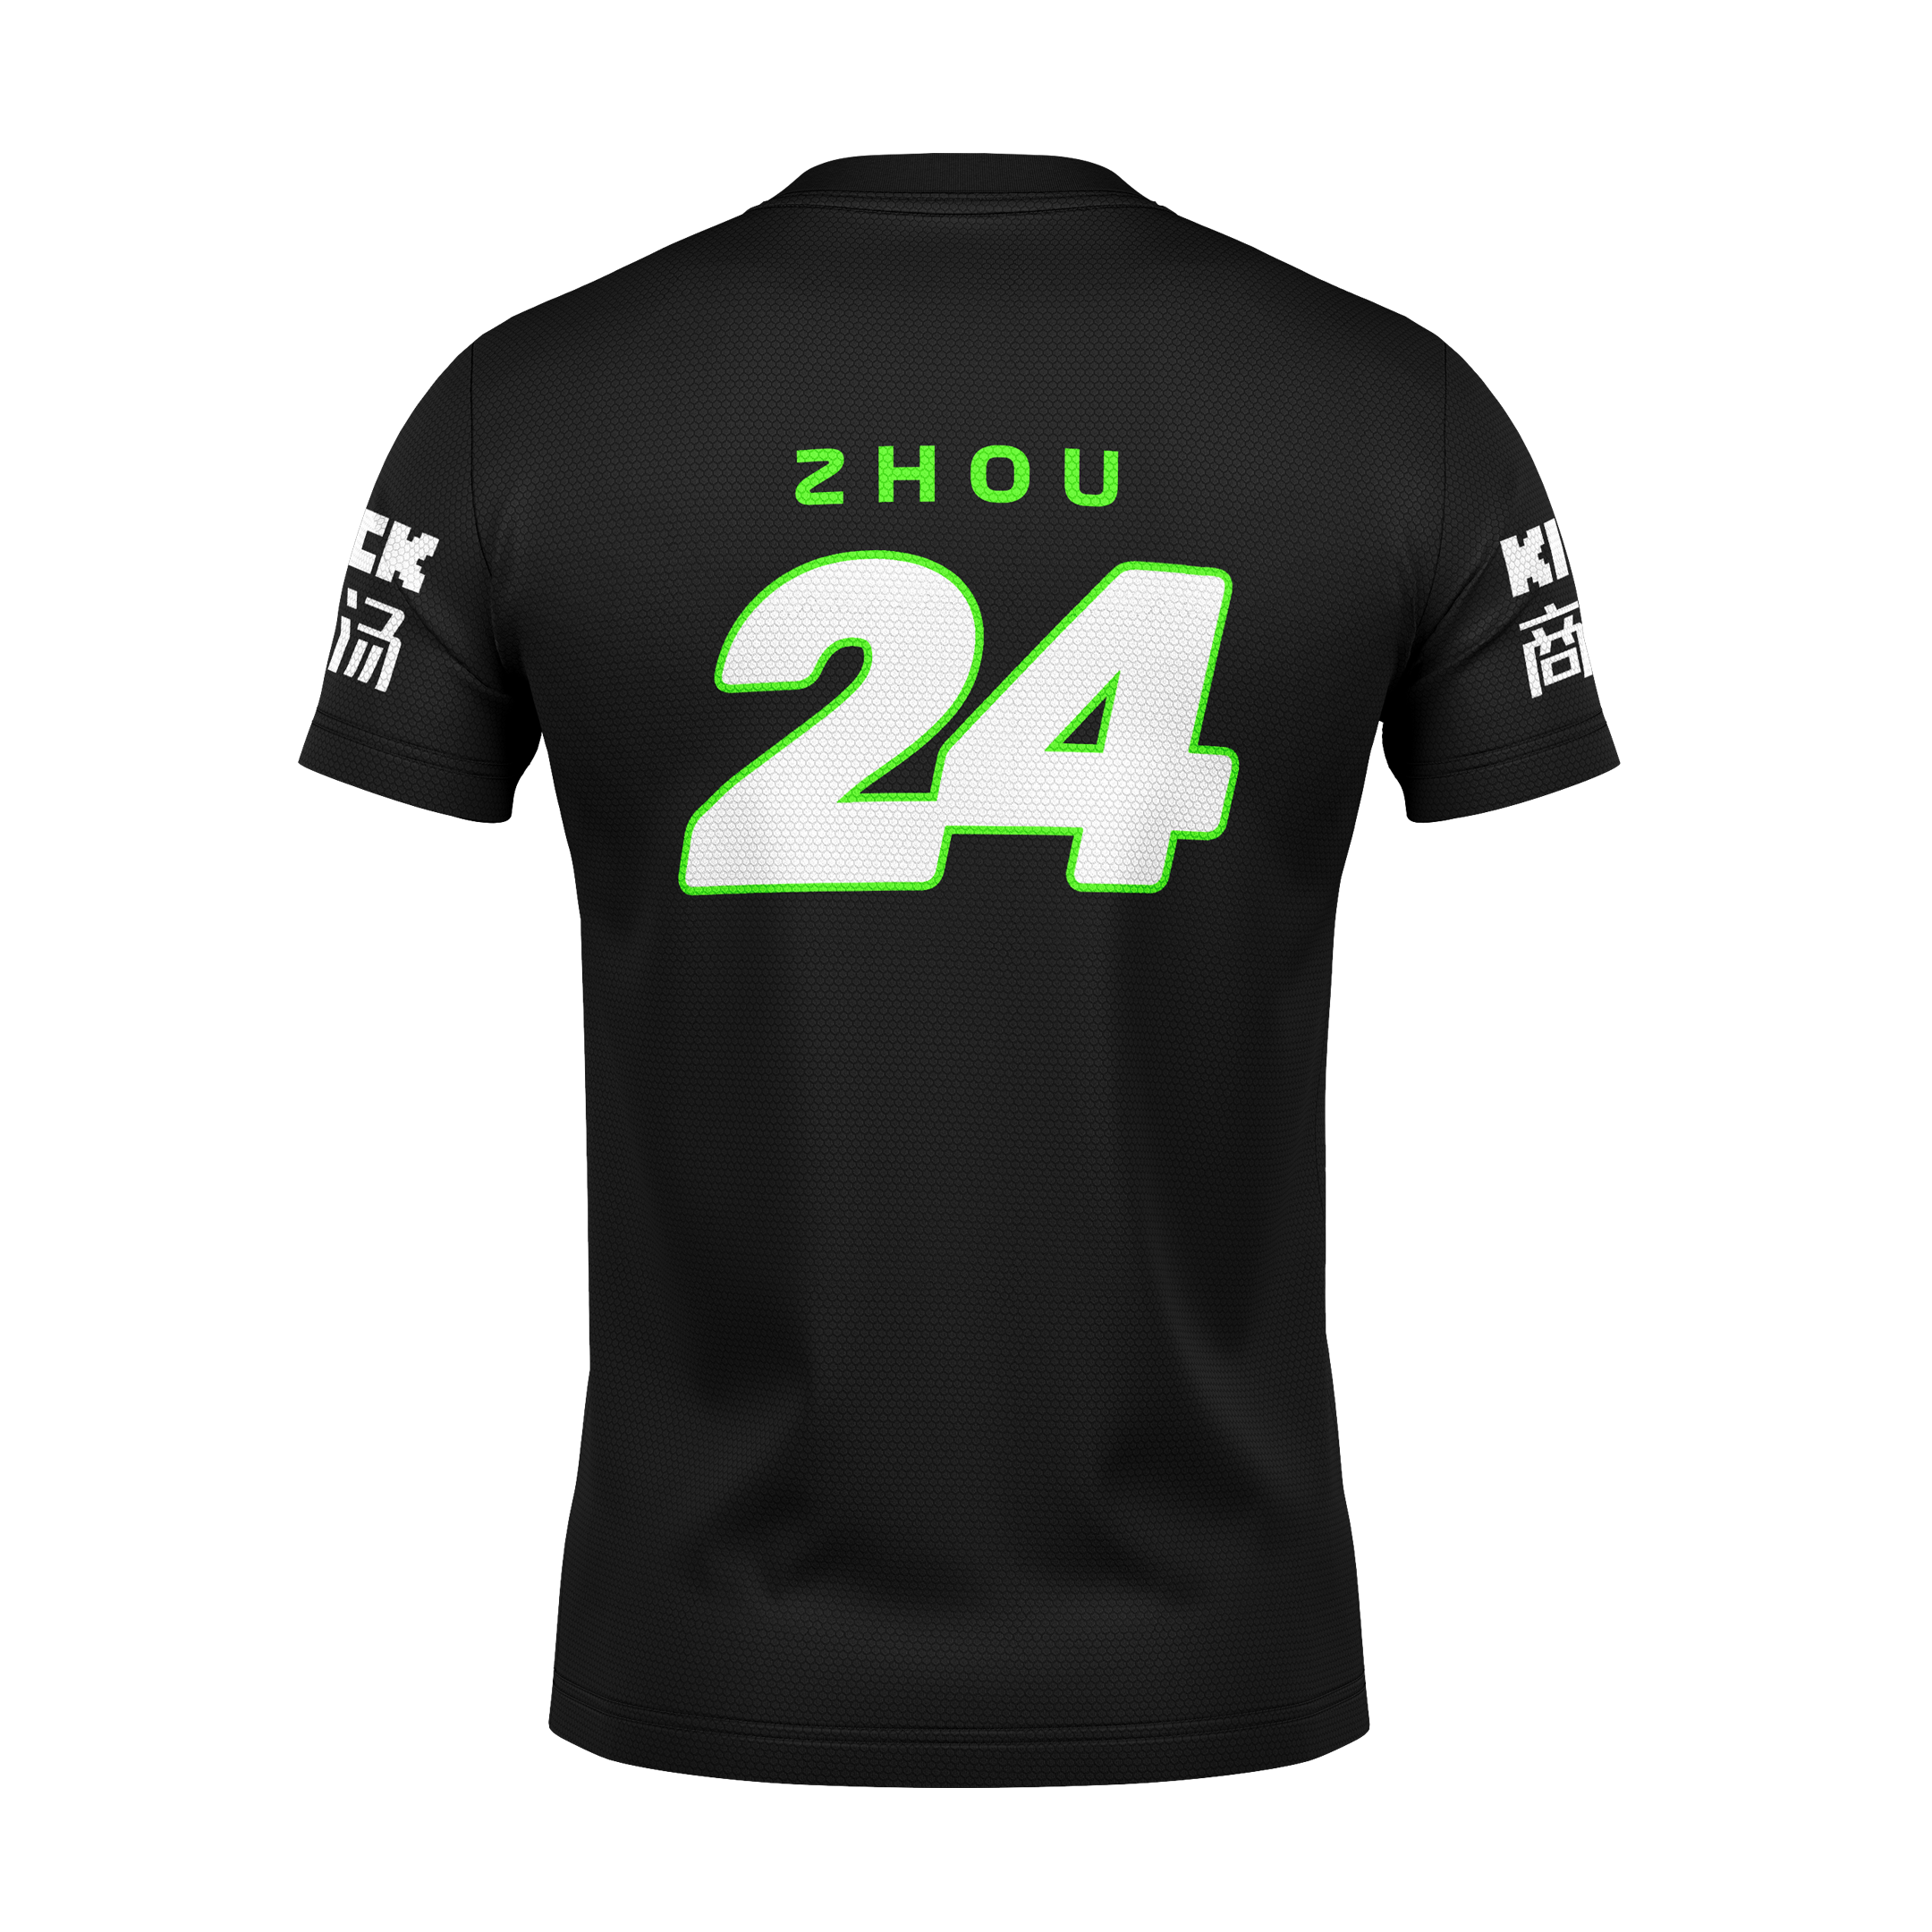 Camiseta DryFit Zhou Stake Sauber 2024 Preta